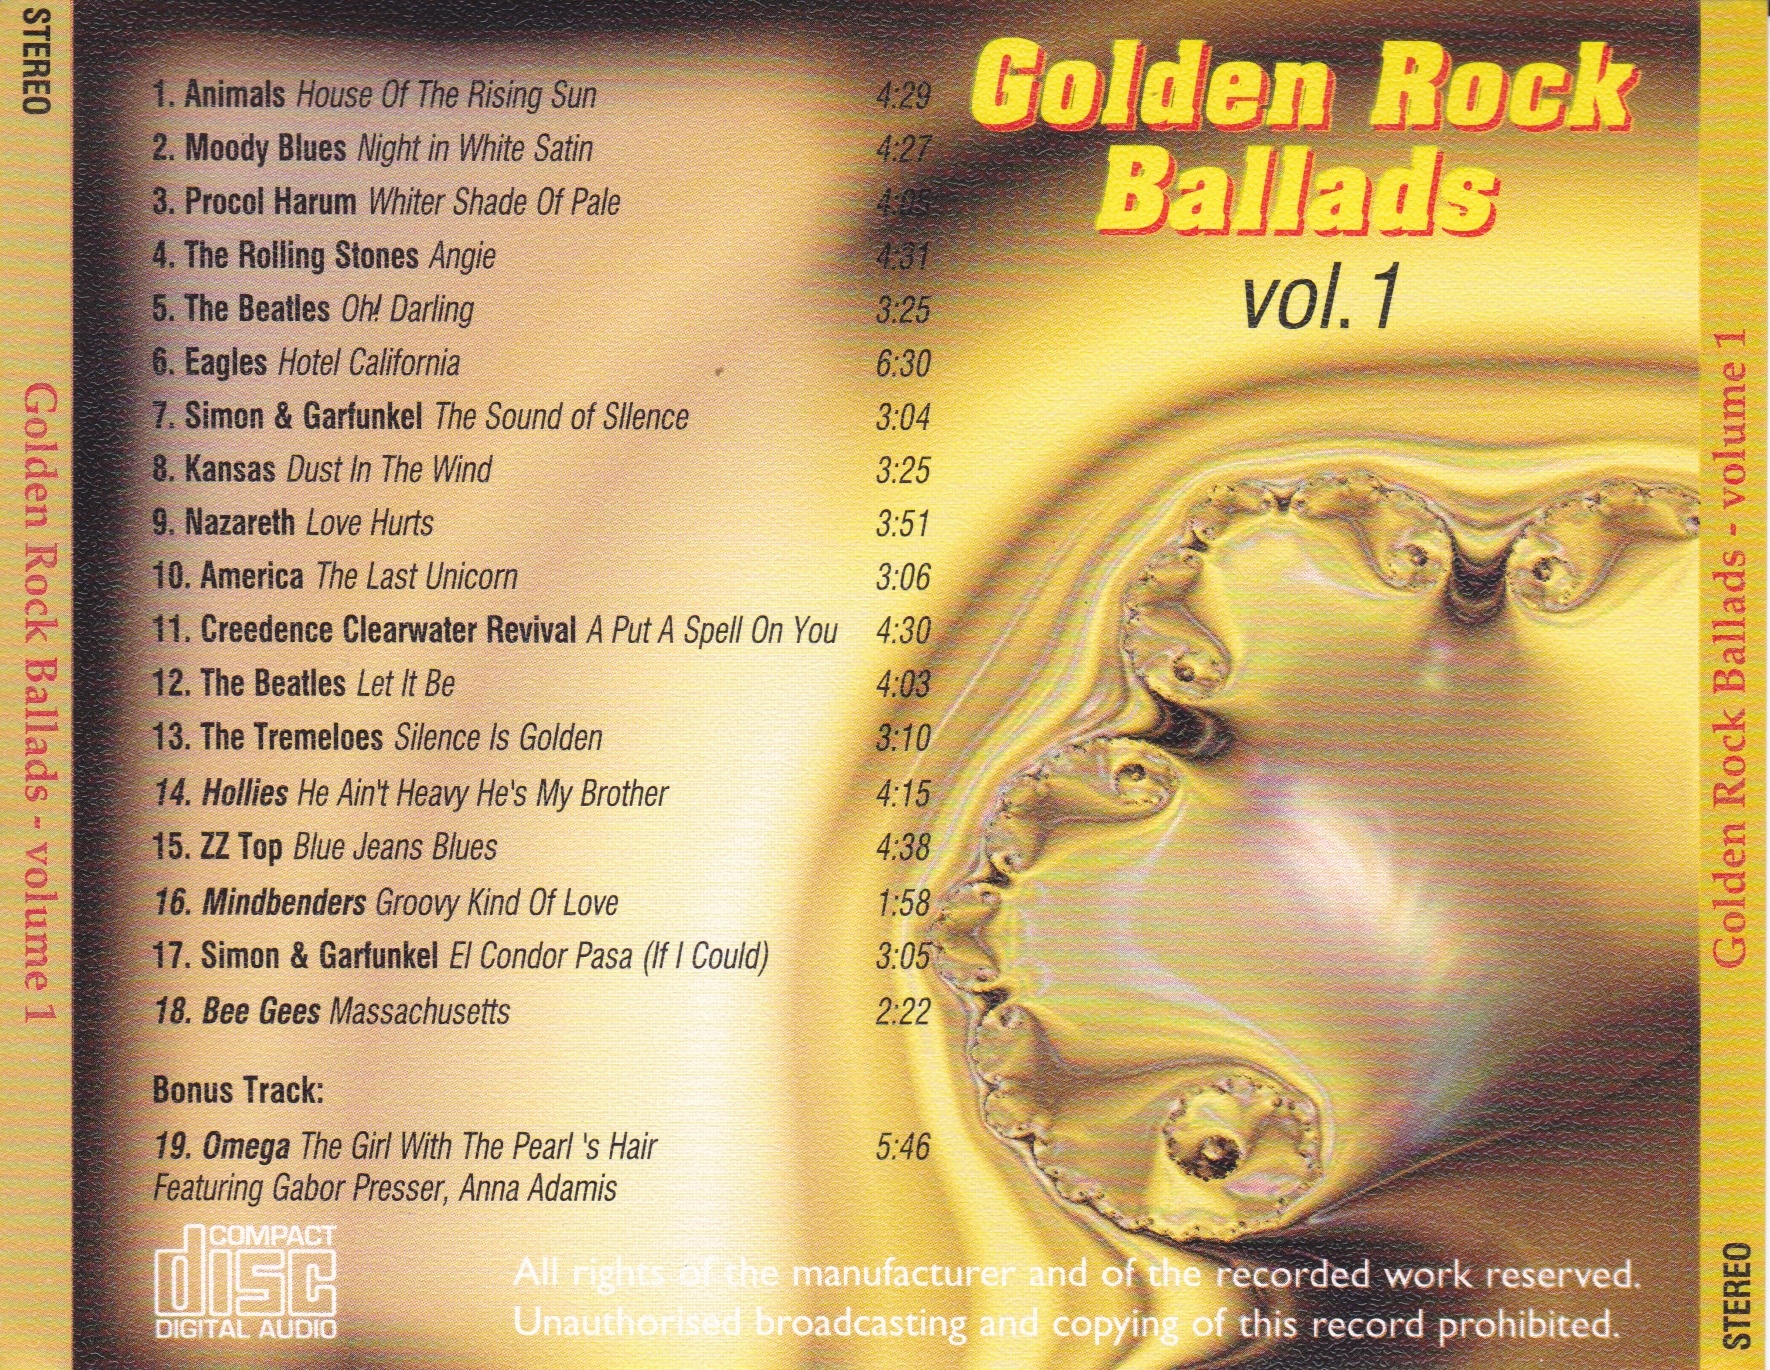 Сборник лучших баллад. Golden Rock Ballads диск. Golden Rock Ballads Vol 1. Rock Ballads сборник. Golden Ballads сборник.